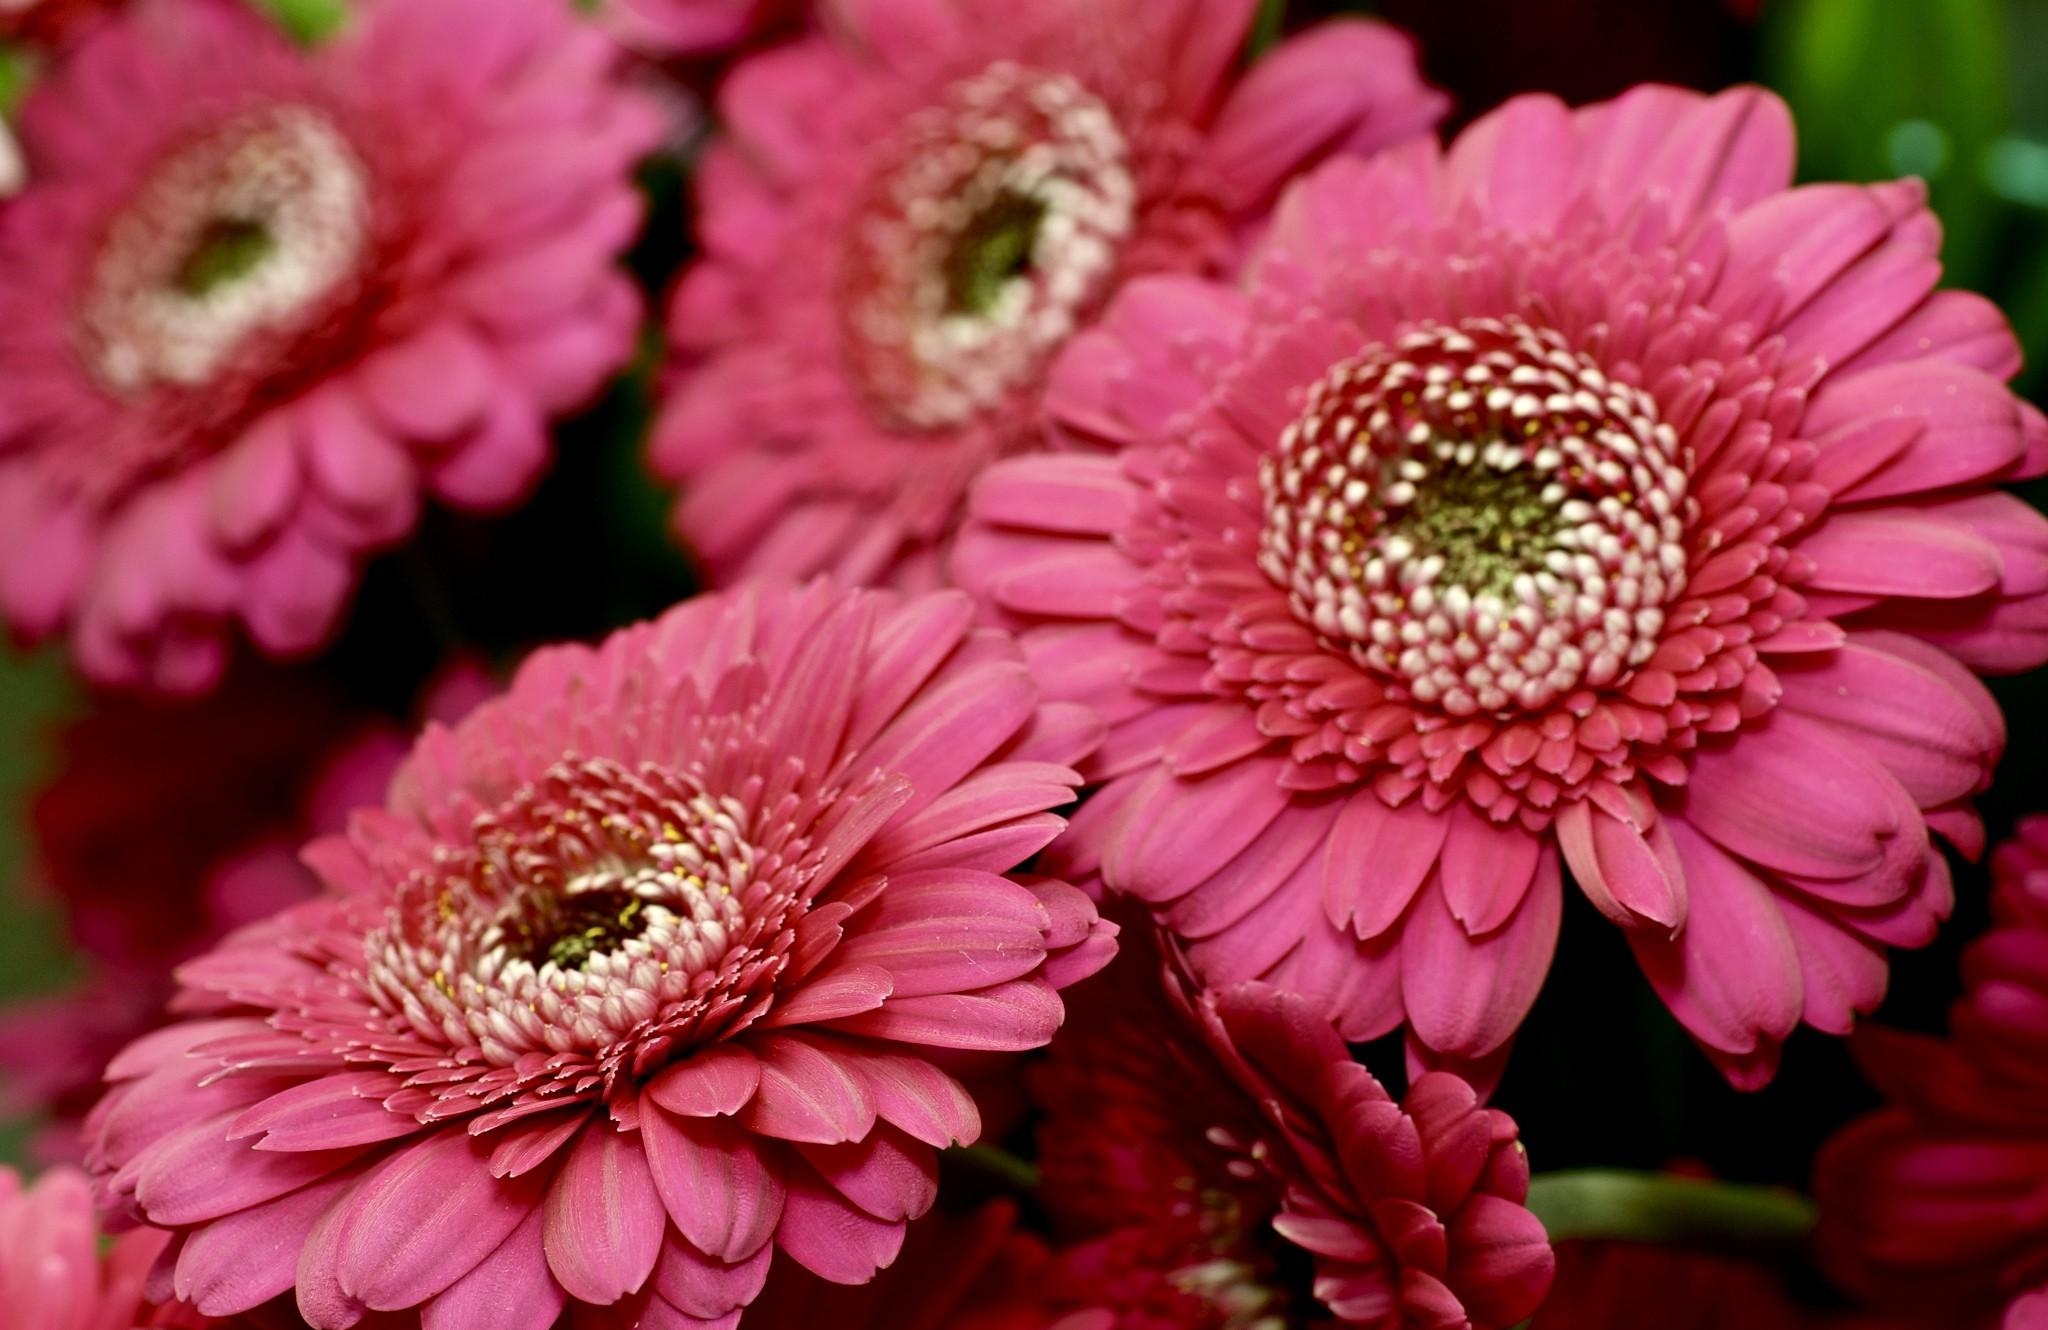 flowers, gerberas, petals, close up, scarlet High Definition image